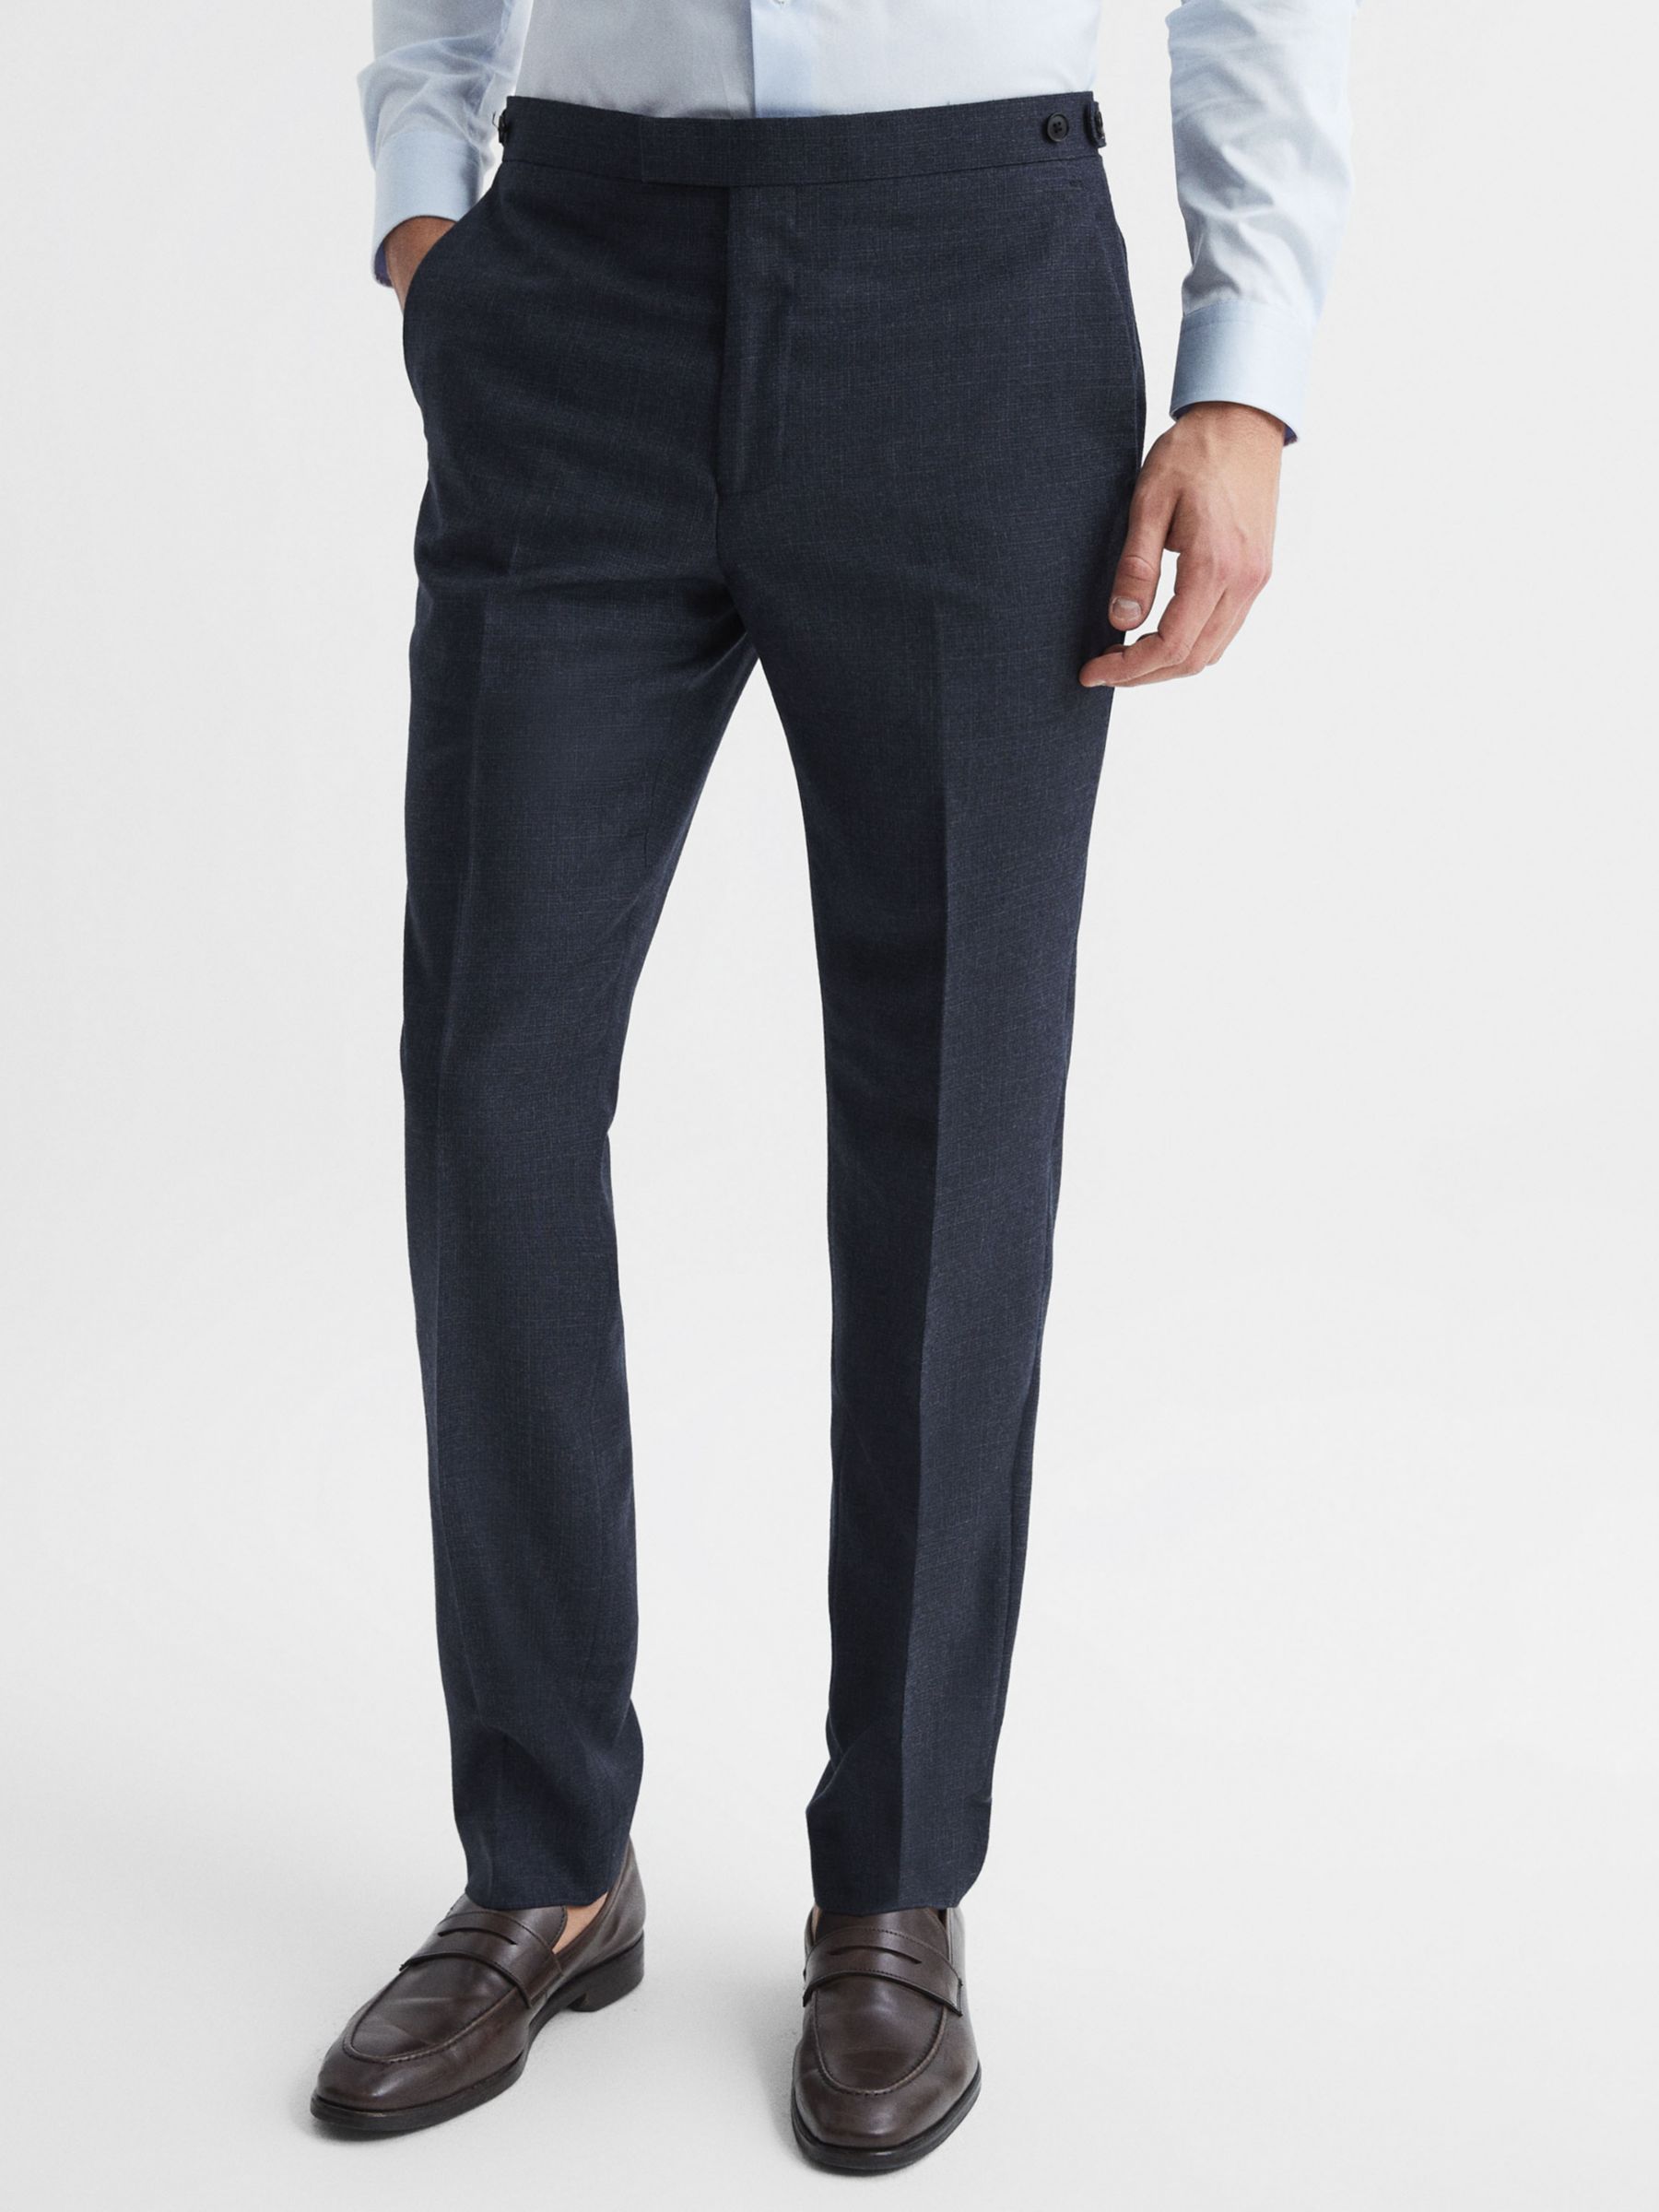 Reiss Dunn Cross Fleck Textured Trousers, Navy at John Lewis & Partners